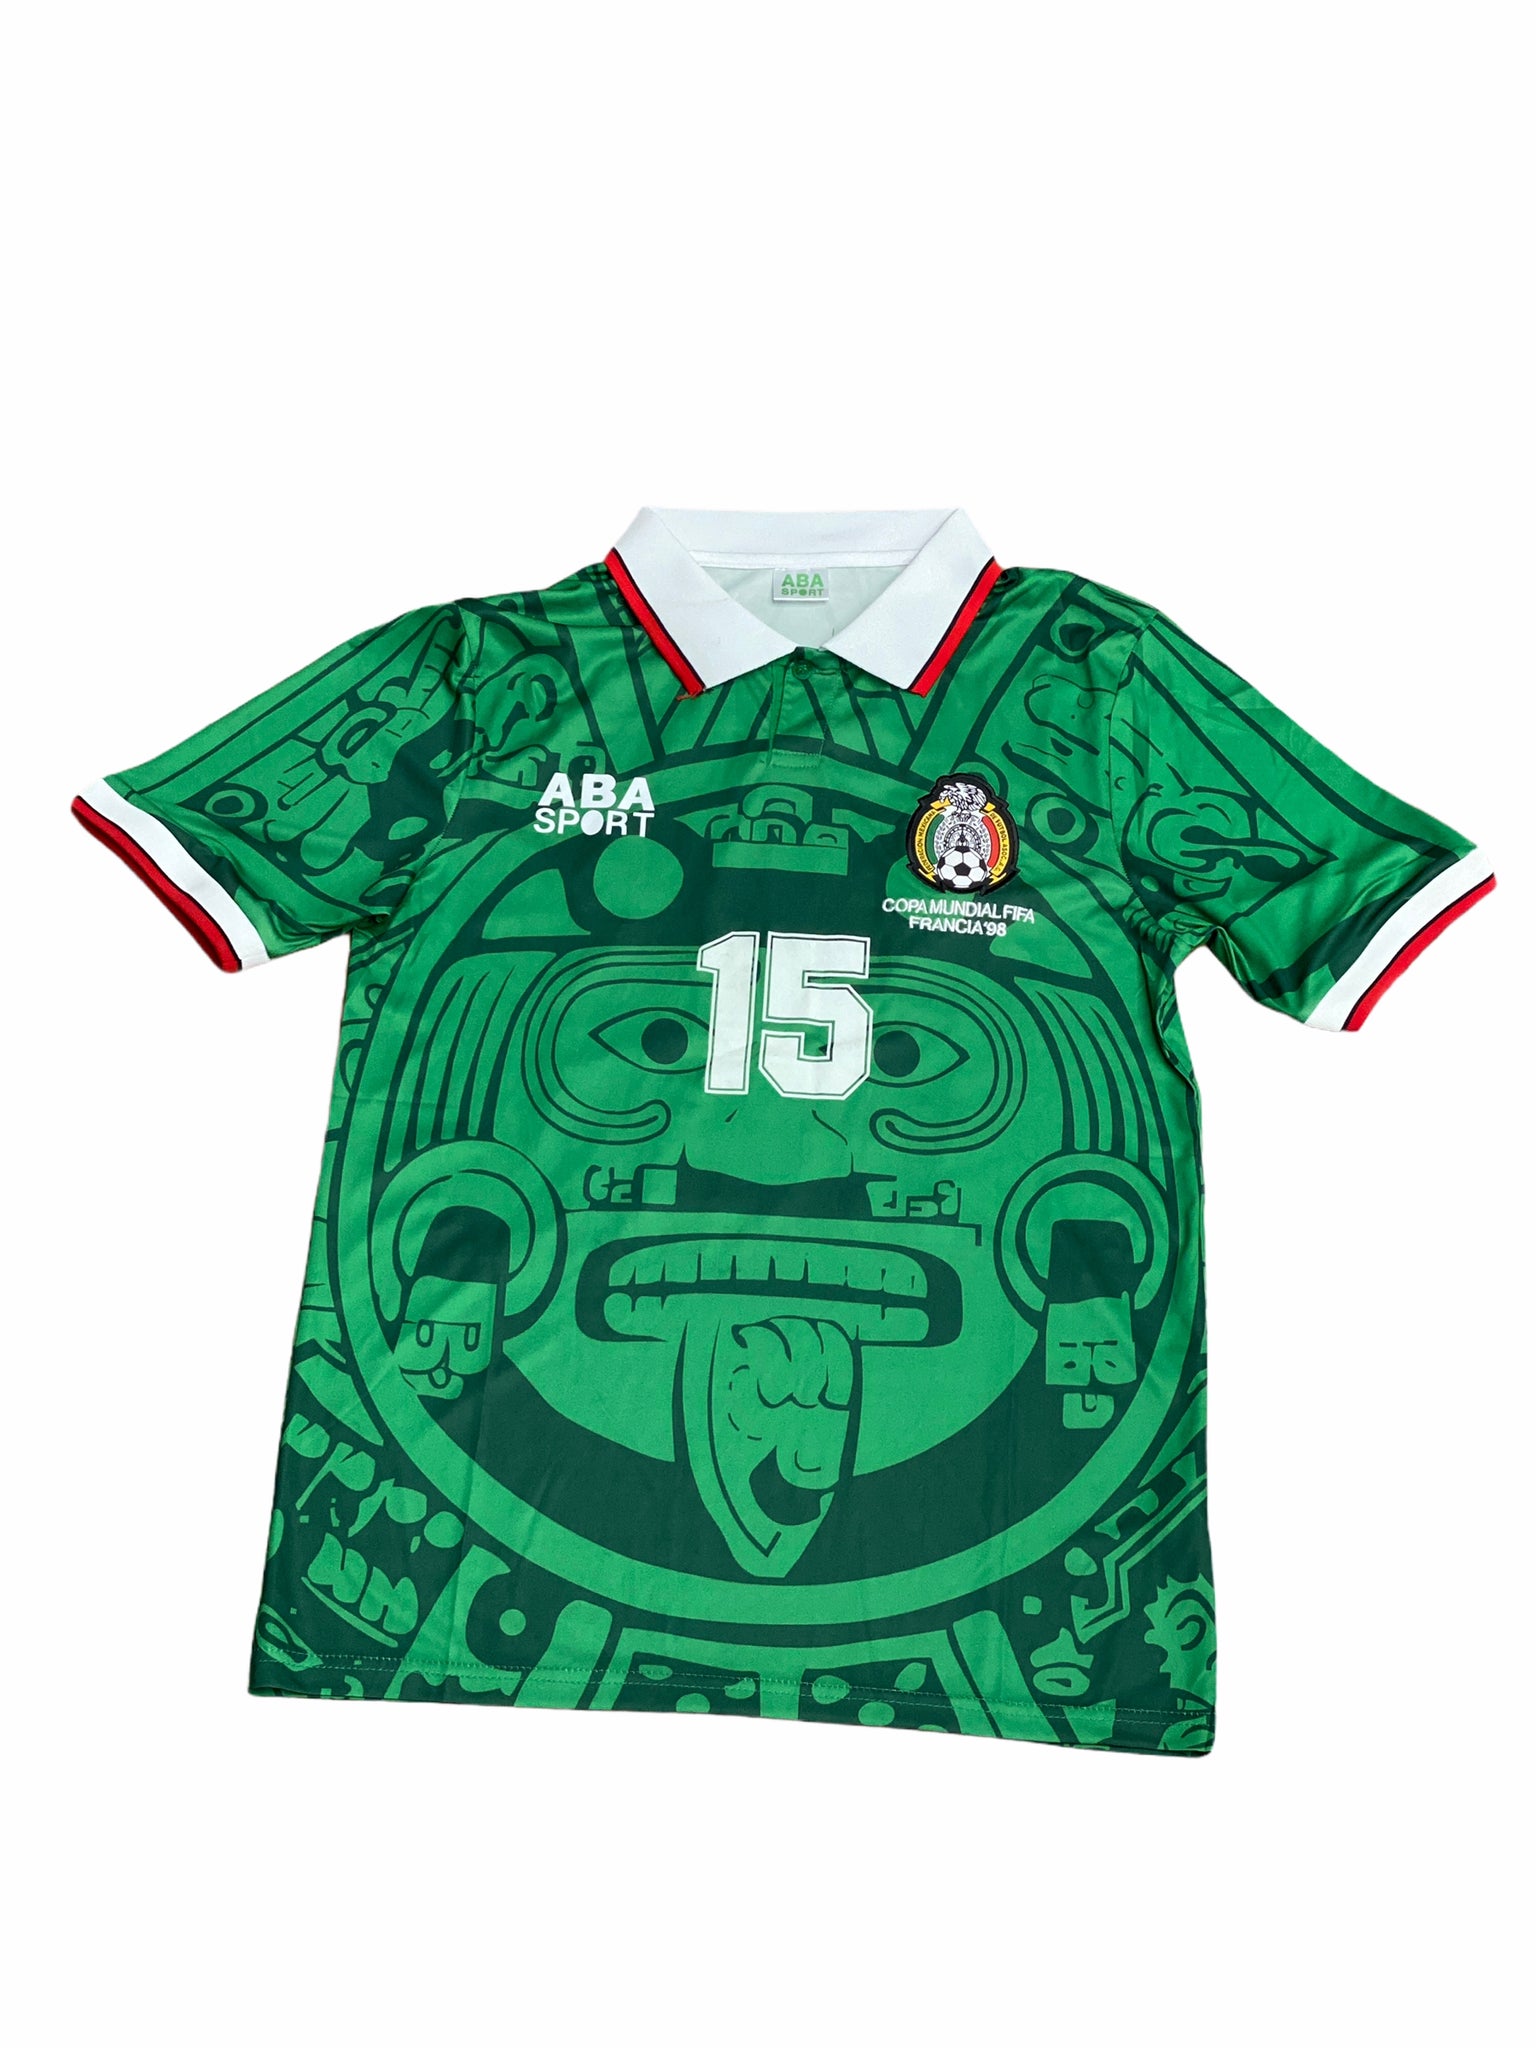 Luis Hernández's vintage Mexico jersey